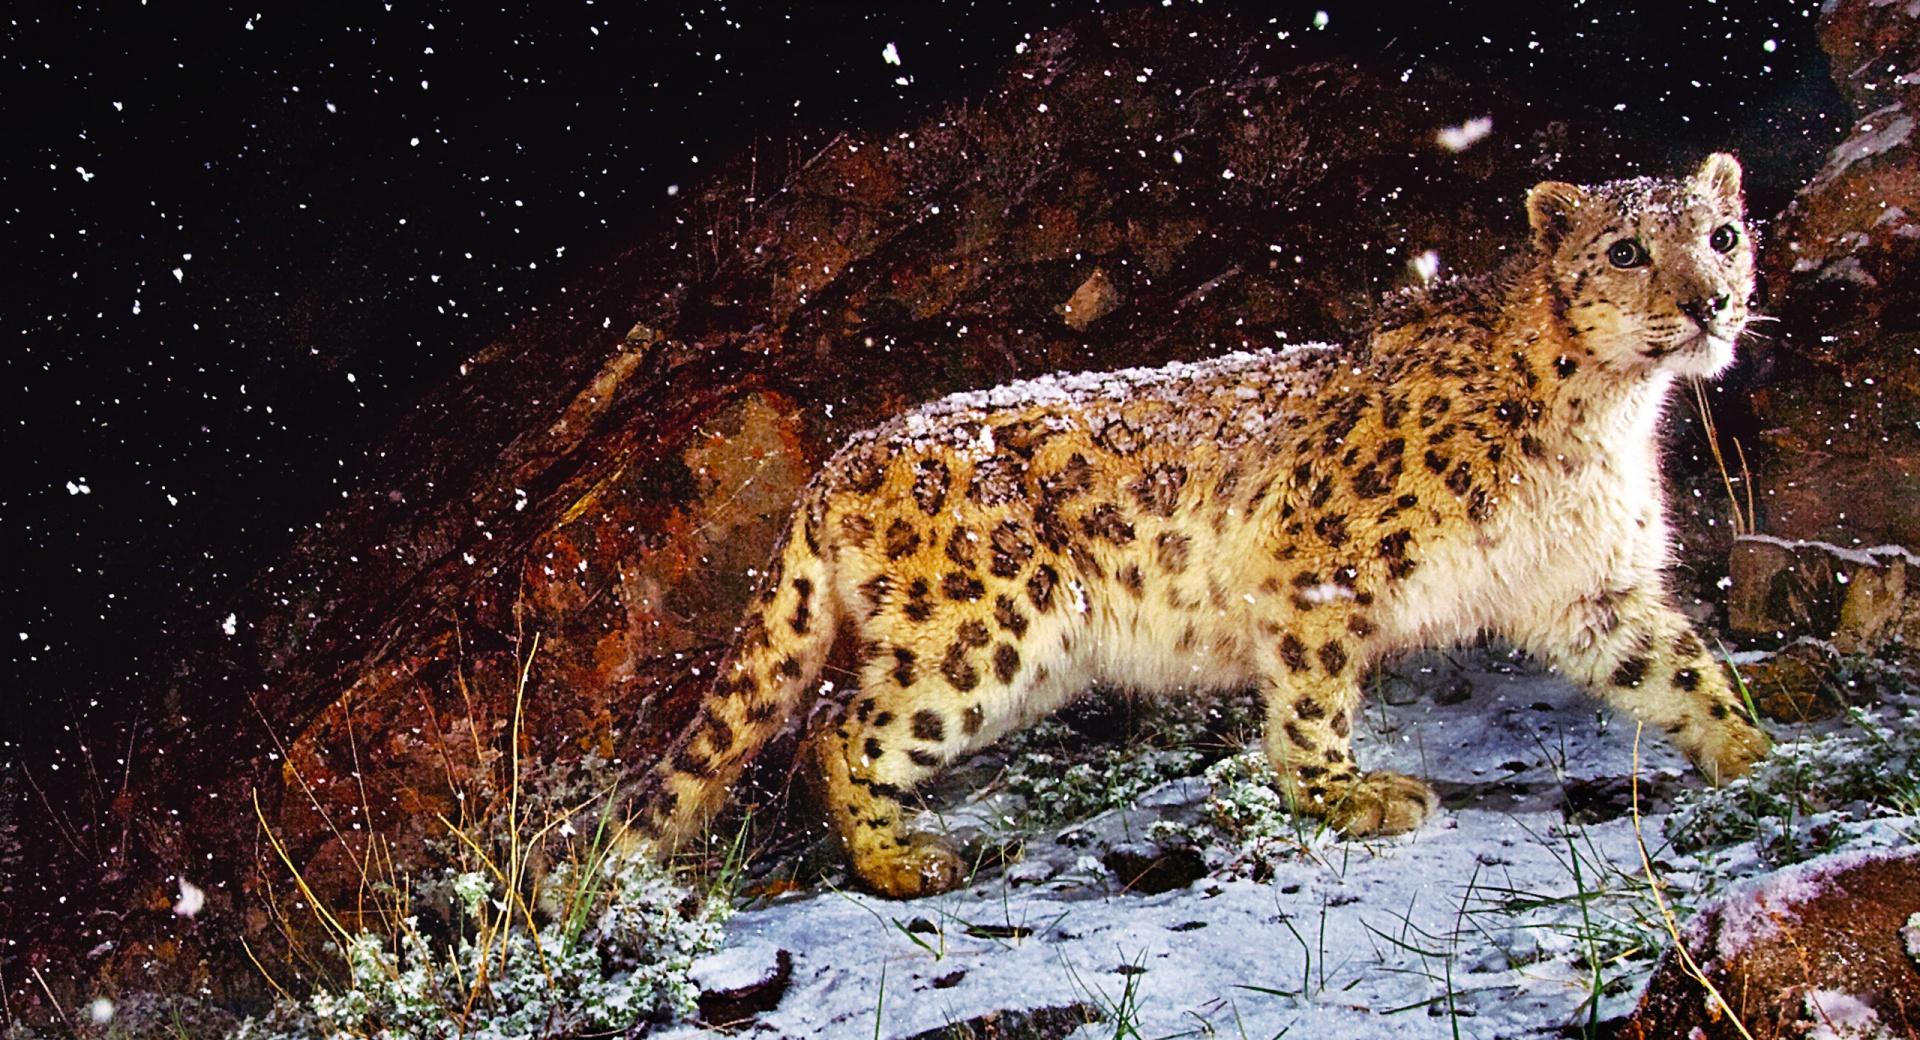 Snow Leopard Flurries at 1024 x 1024 iPad size wallpapers HD quality